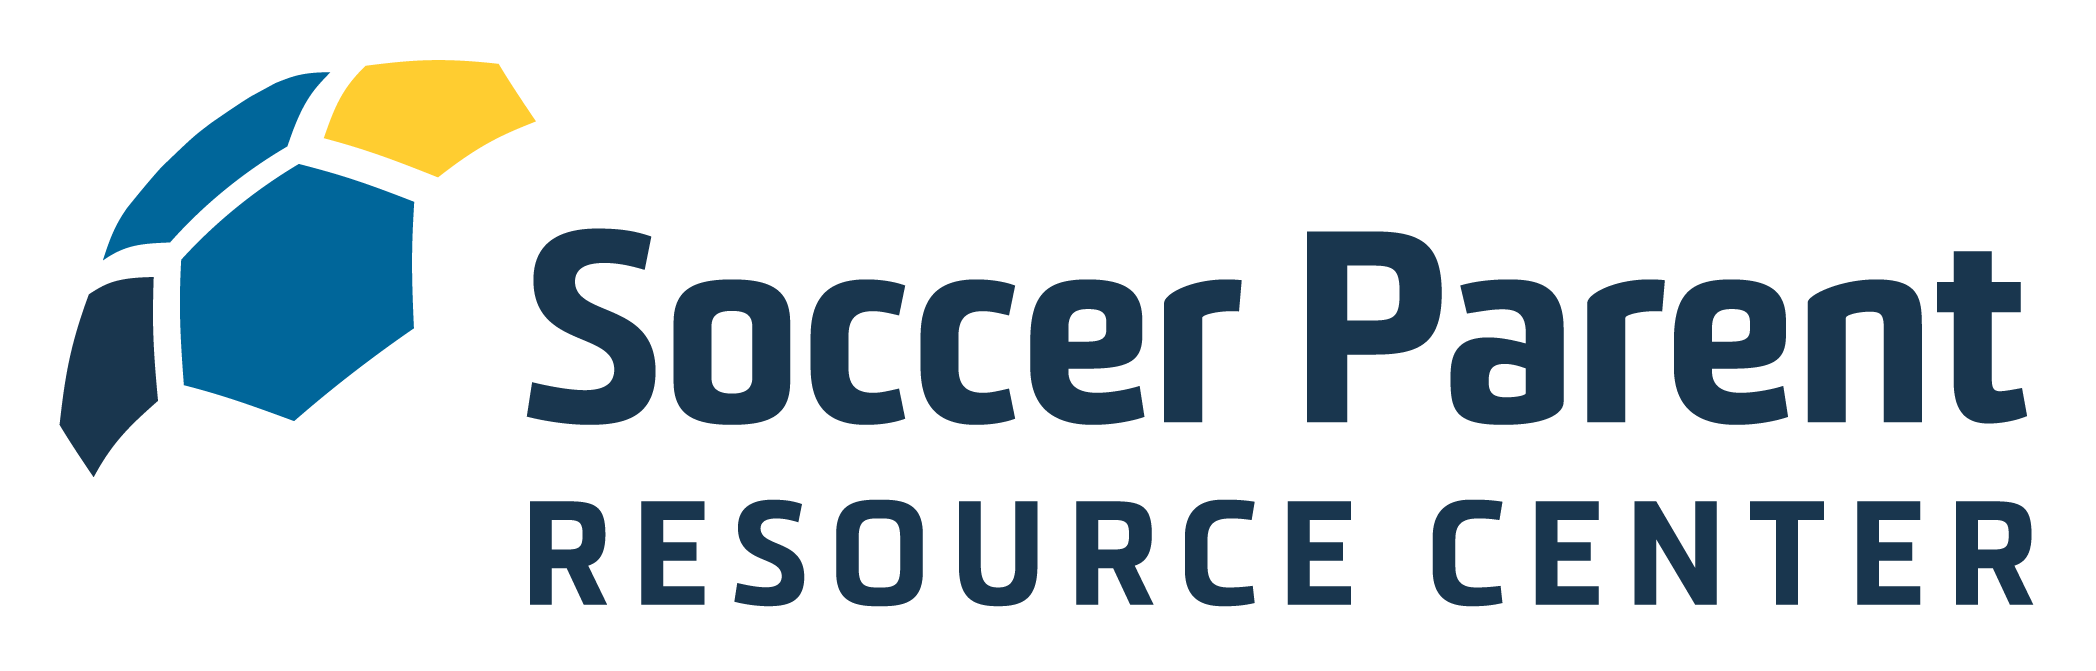 Soccer-Parent-Resource-Center-Logo.png